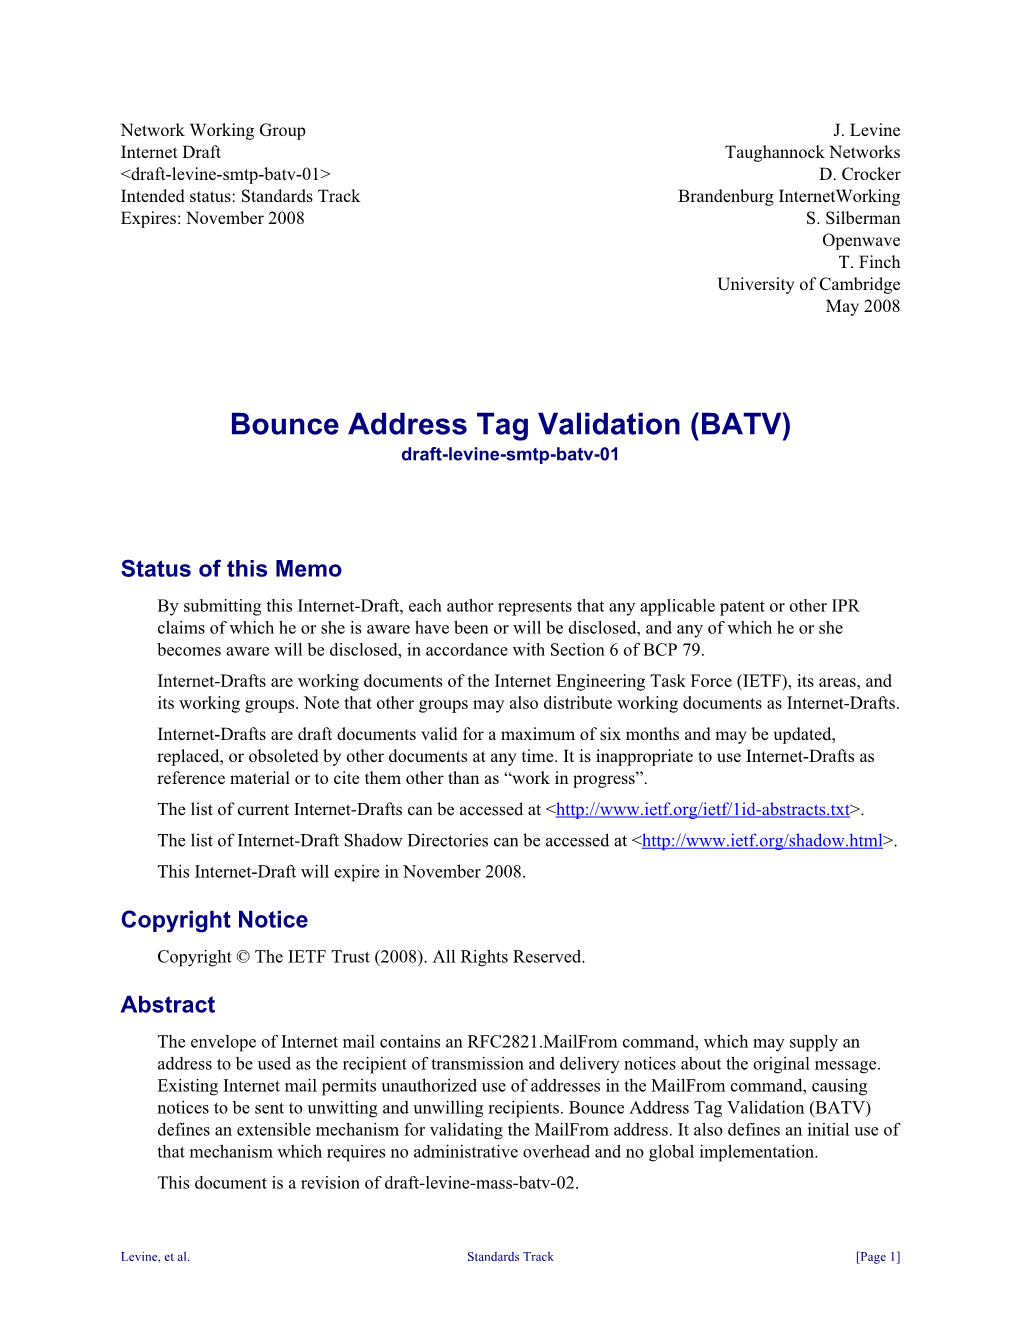 Bounce Address Tag Validation (BATV) Draft-Levine-Smtp-Batv-01